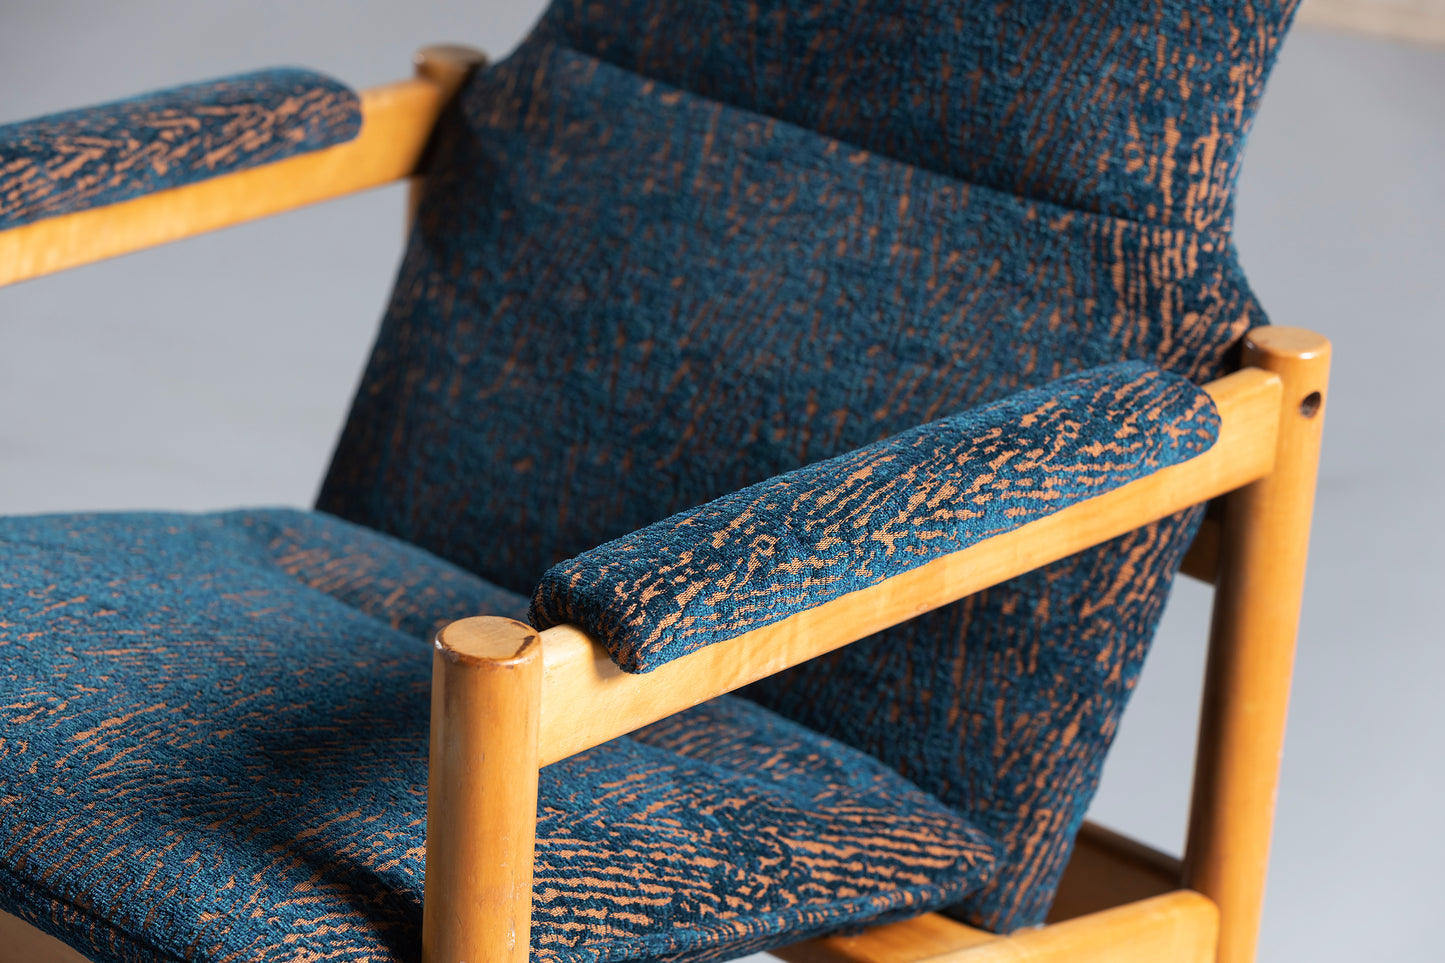 Blue chair armrest upclose